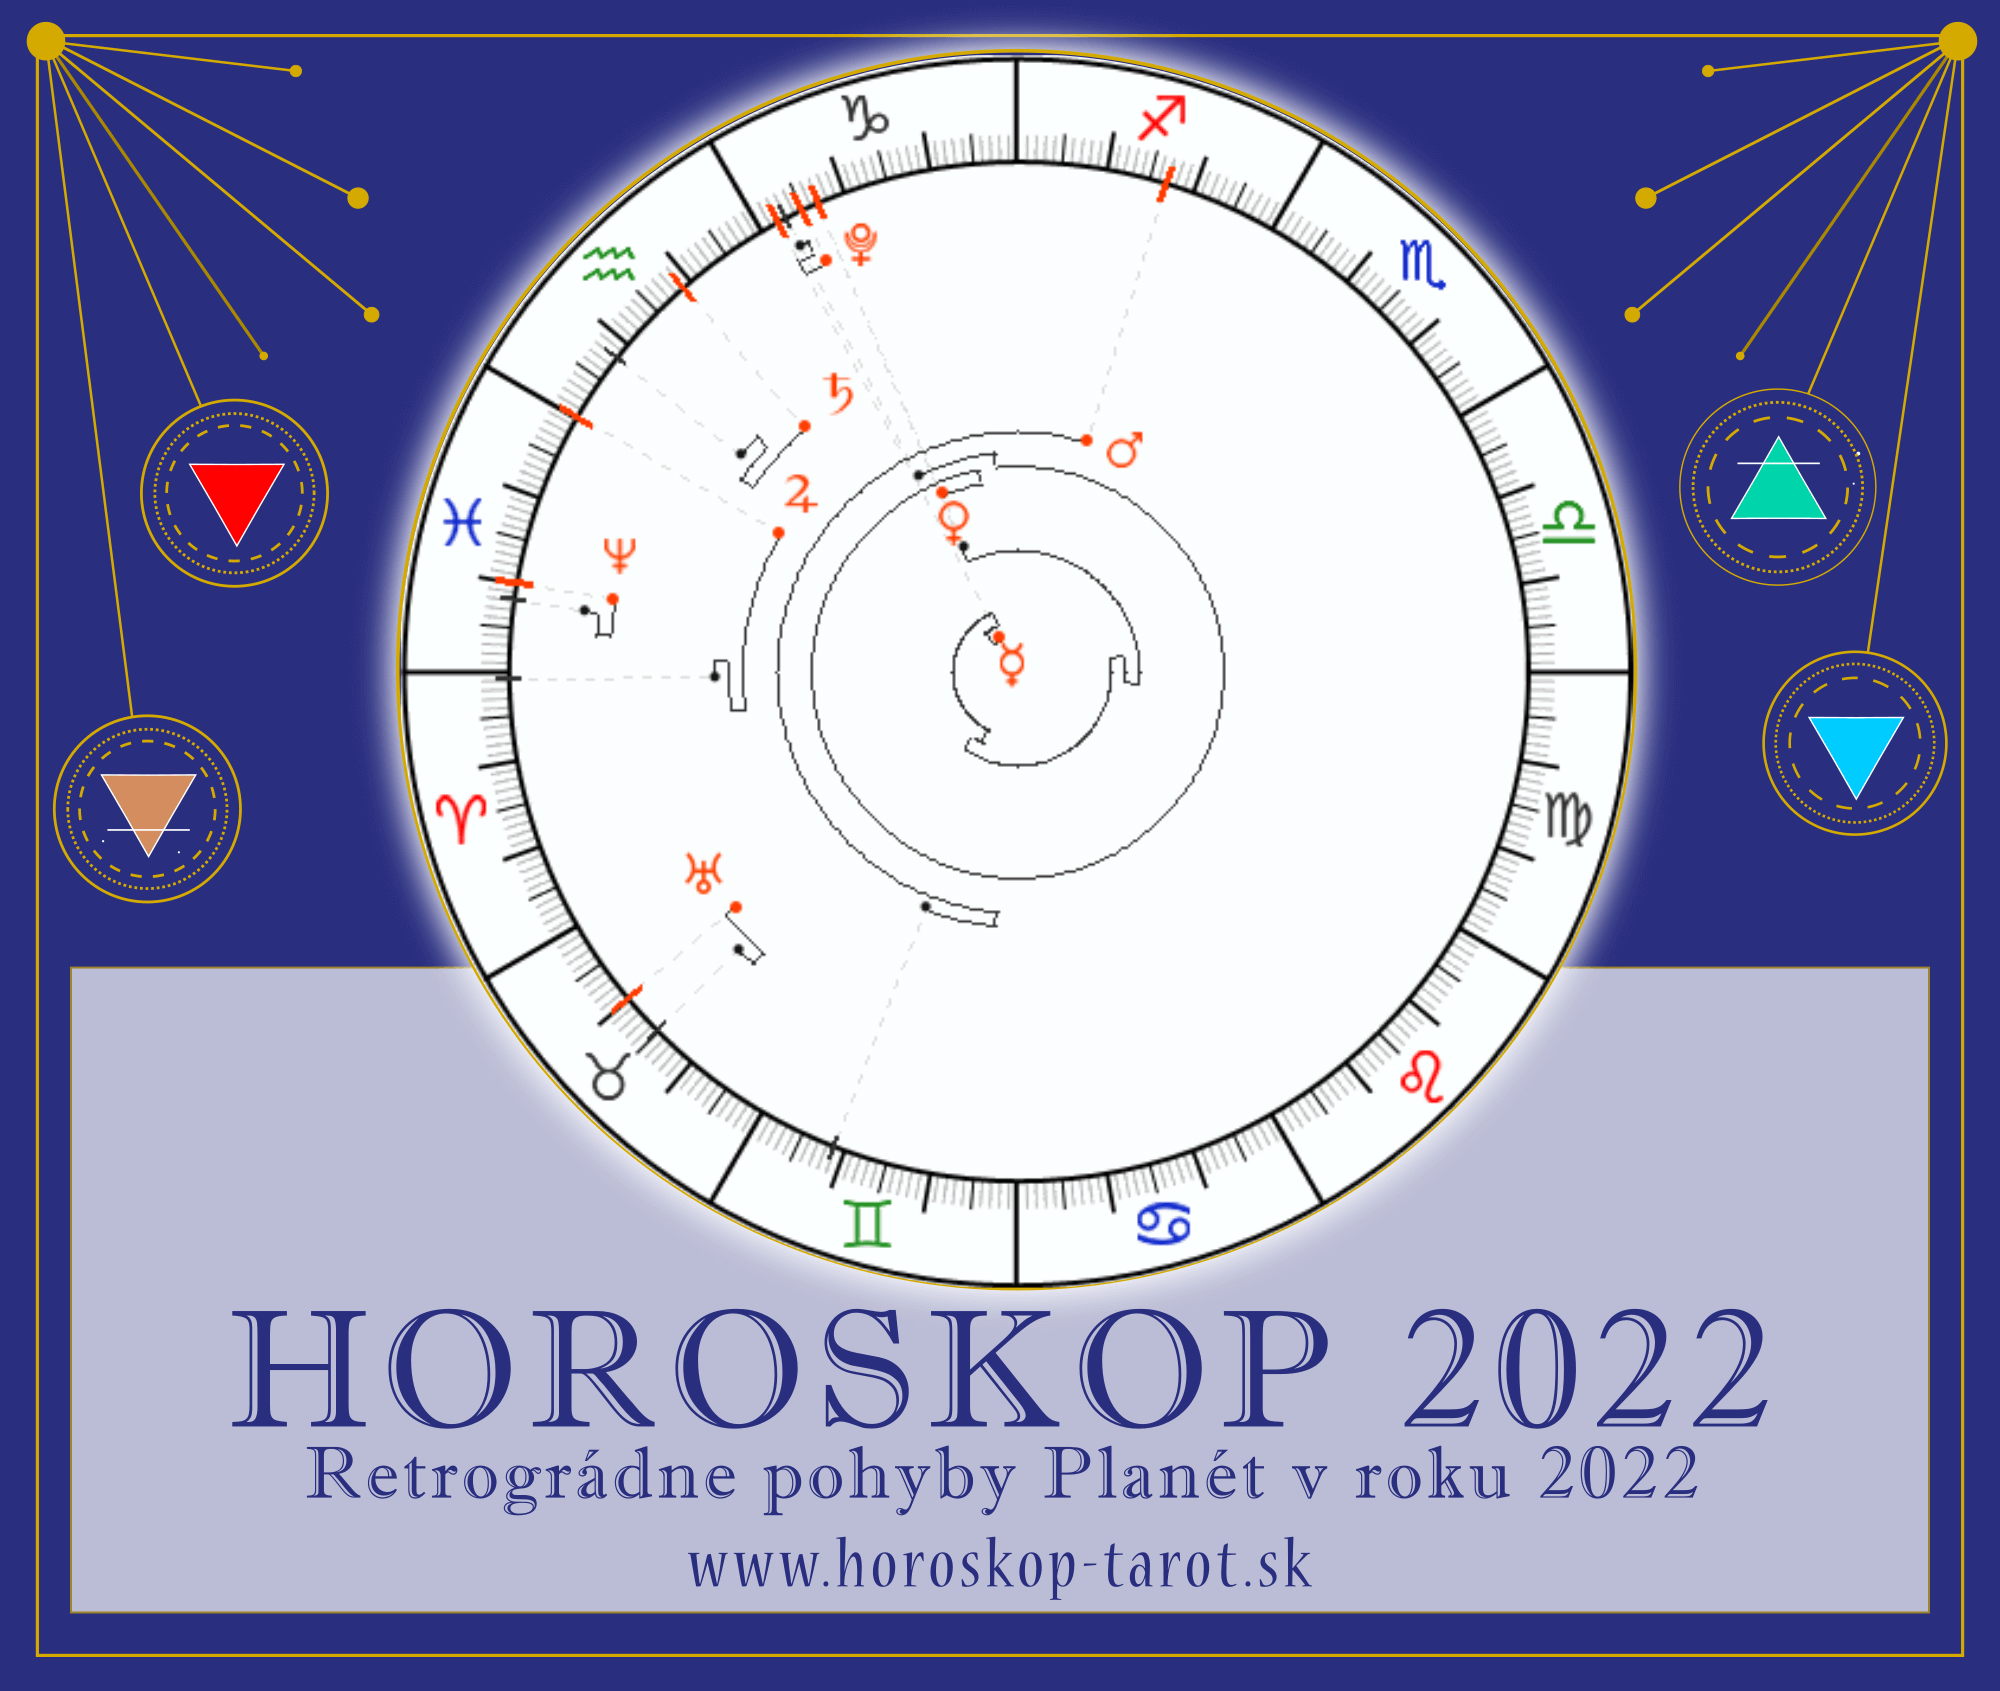 horoskop 2022 a retrográdni planéty roku 2022 - graf